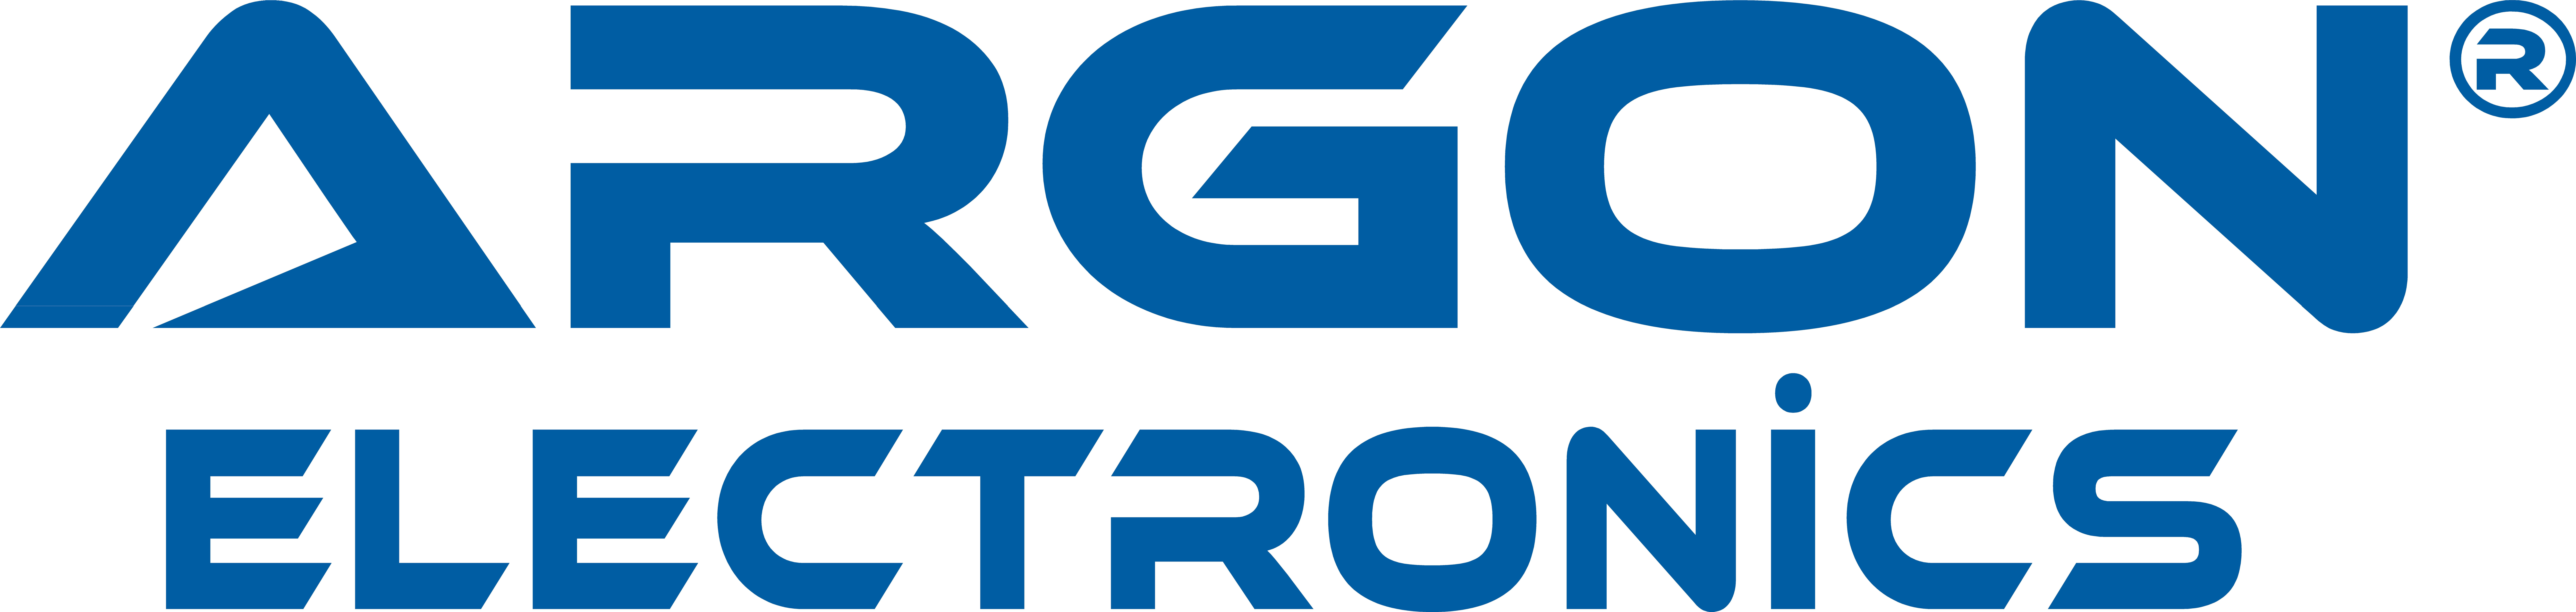 Argonelektronik